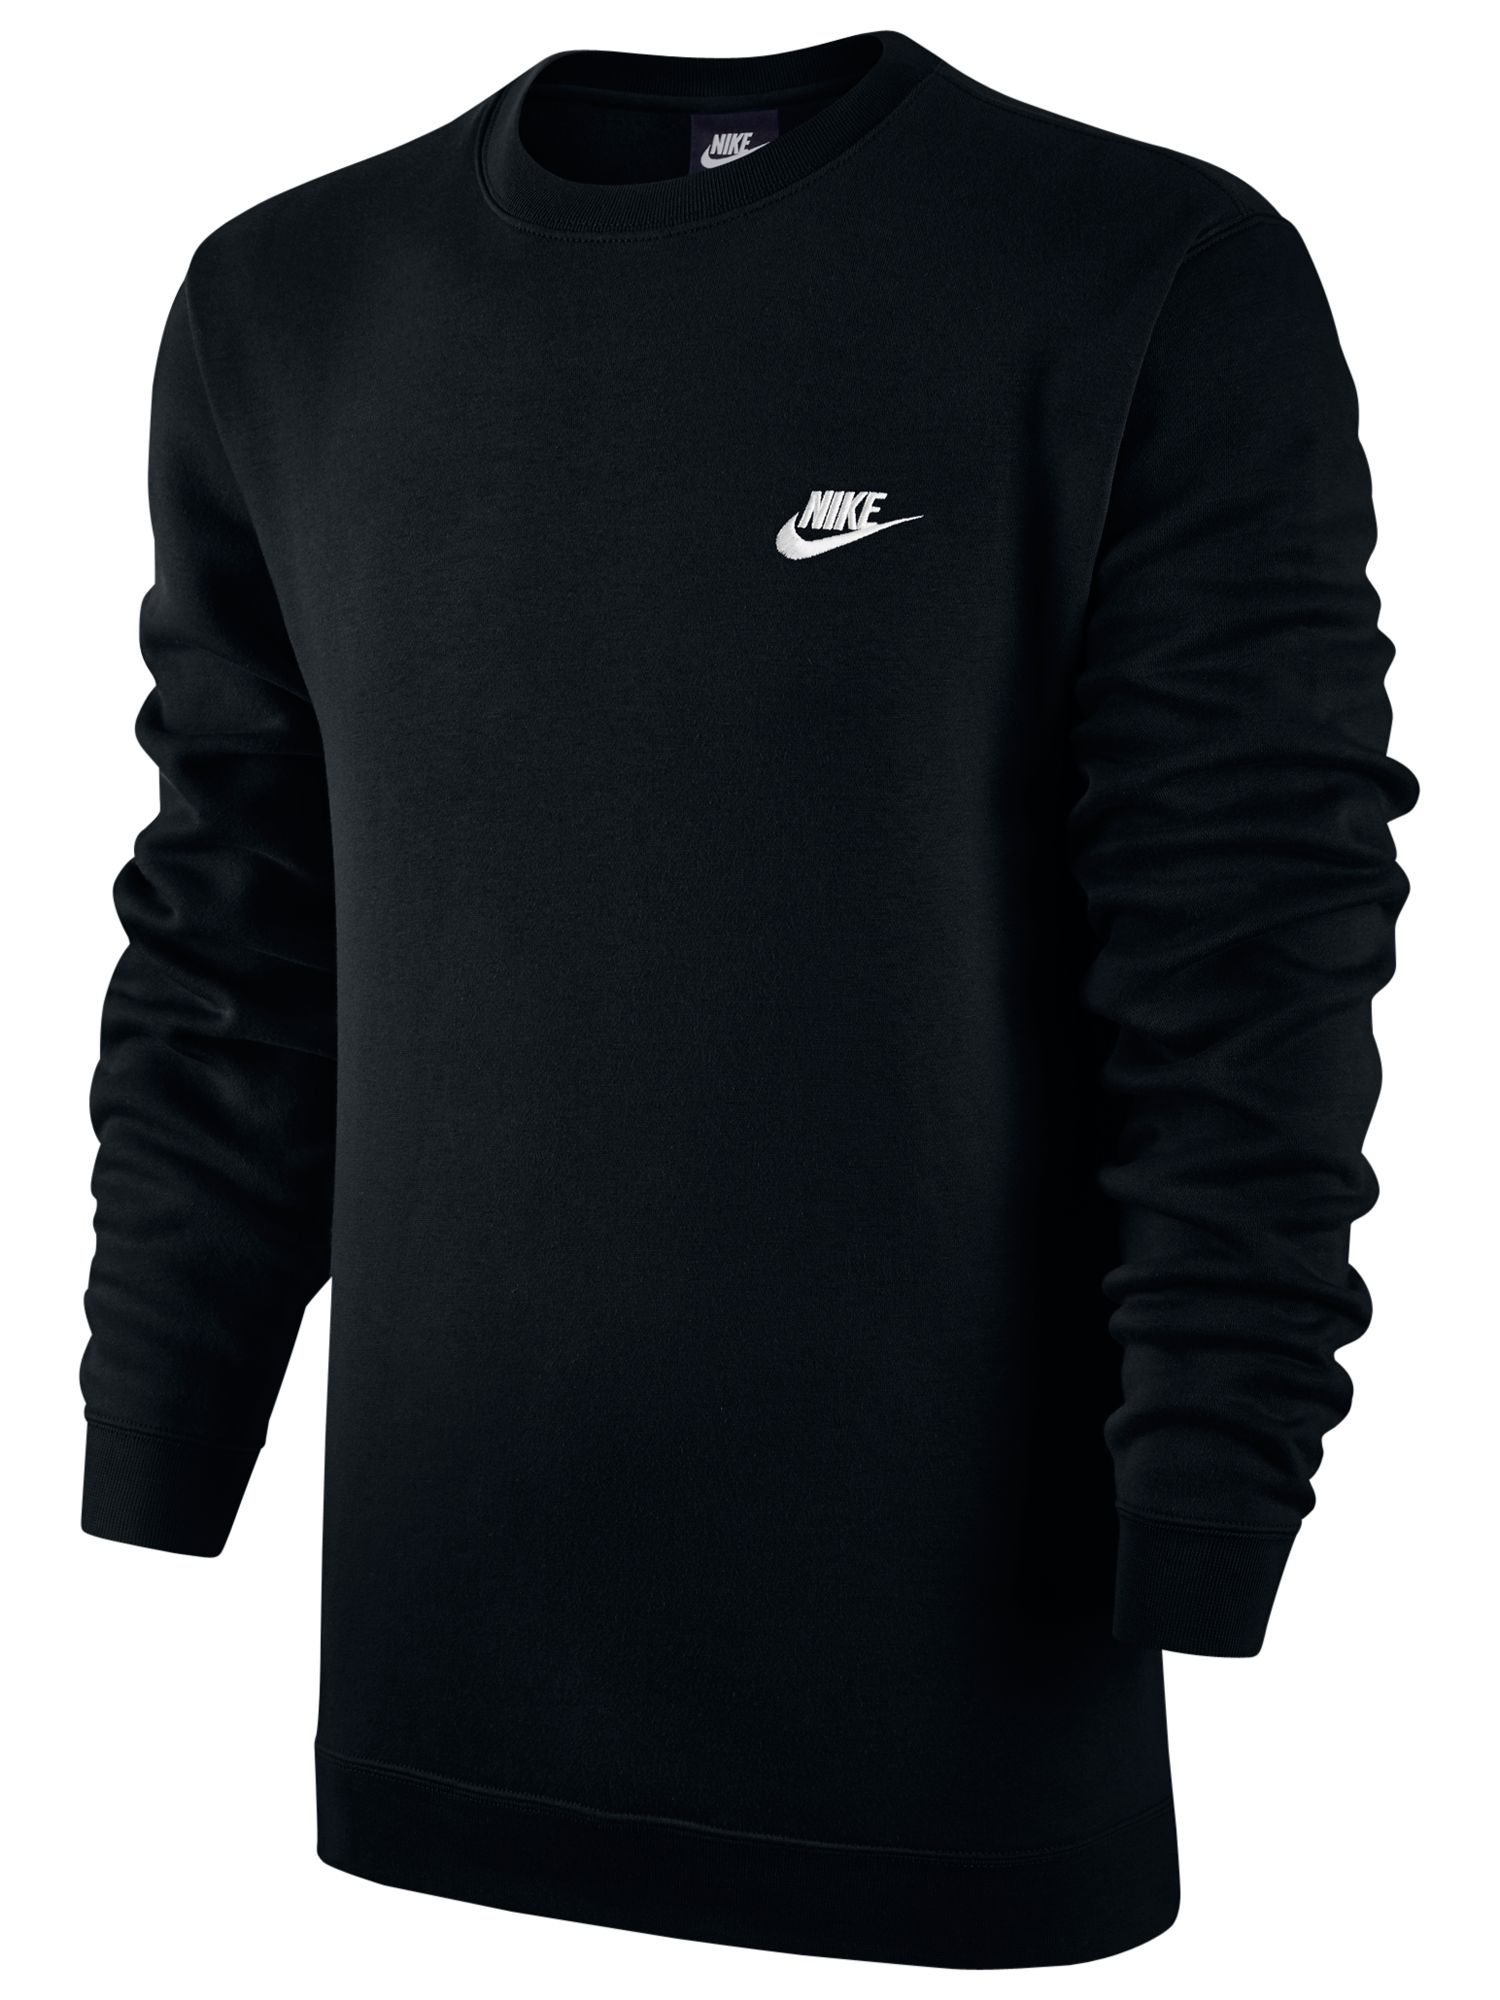 Nike Sportswear Crew Top, Black, M